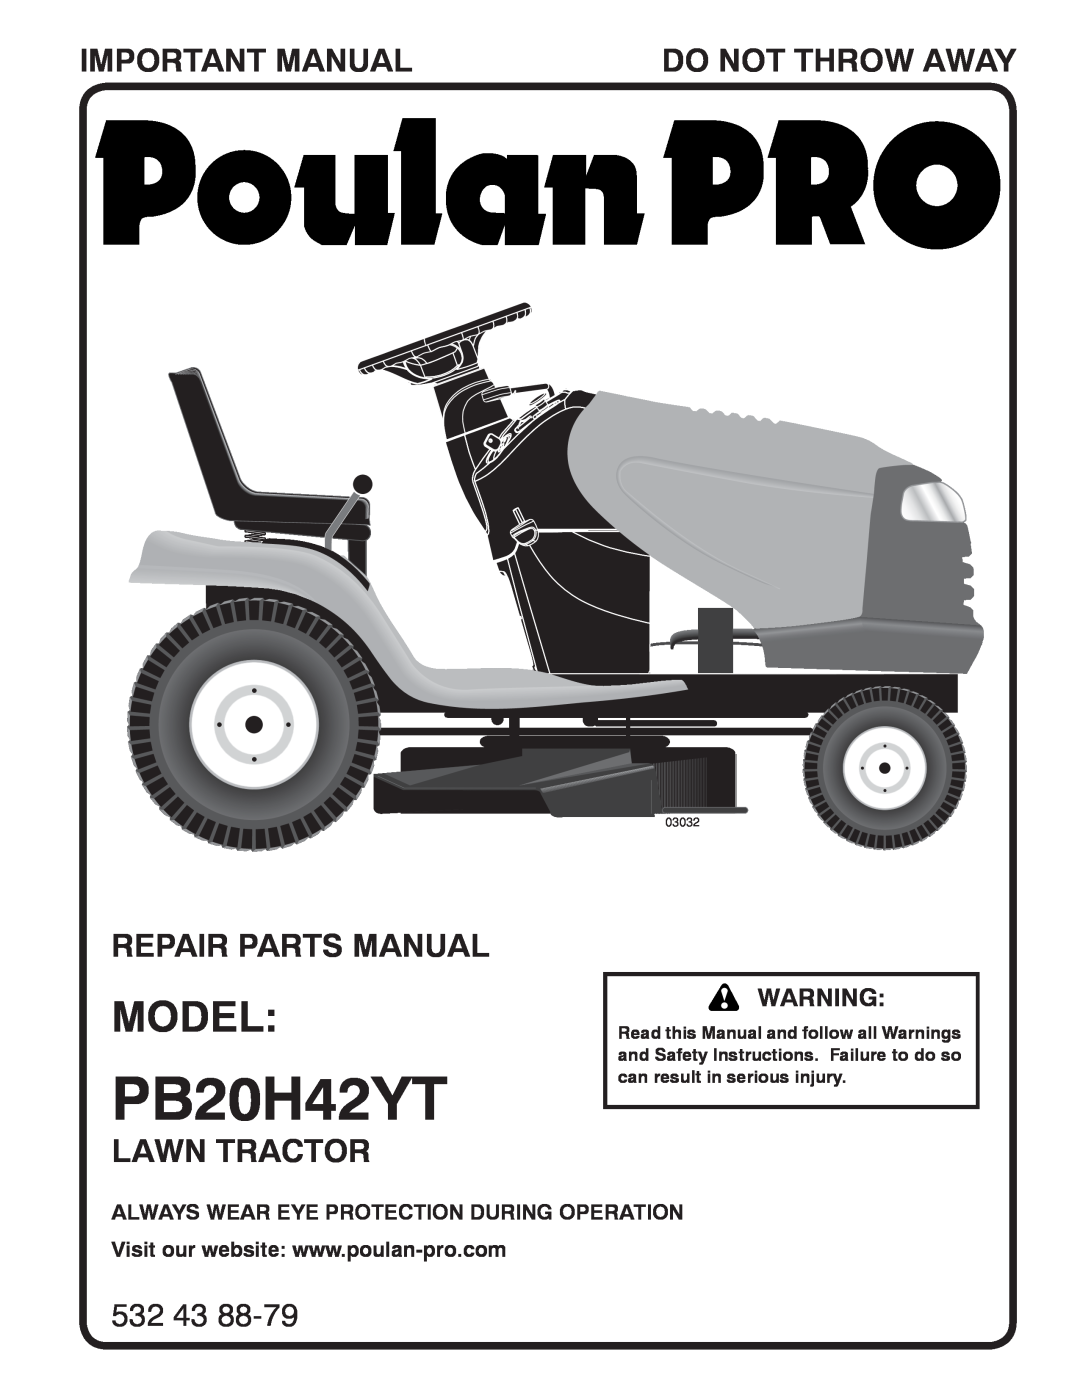 Poulan PB20H42YT manual Model, Important Manual, Operators Manual, Lawn Tractor, Do Not Throw Away, 03076 